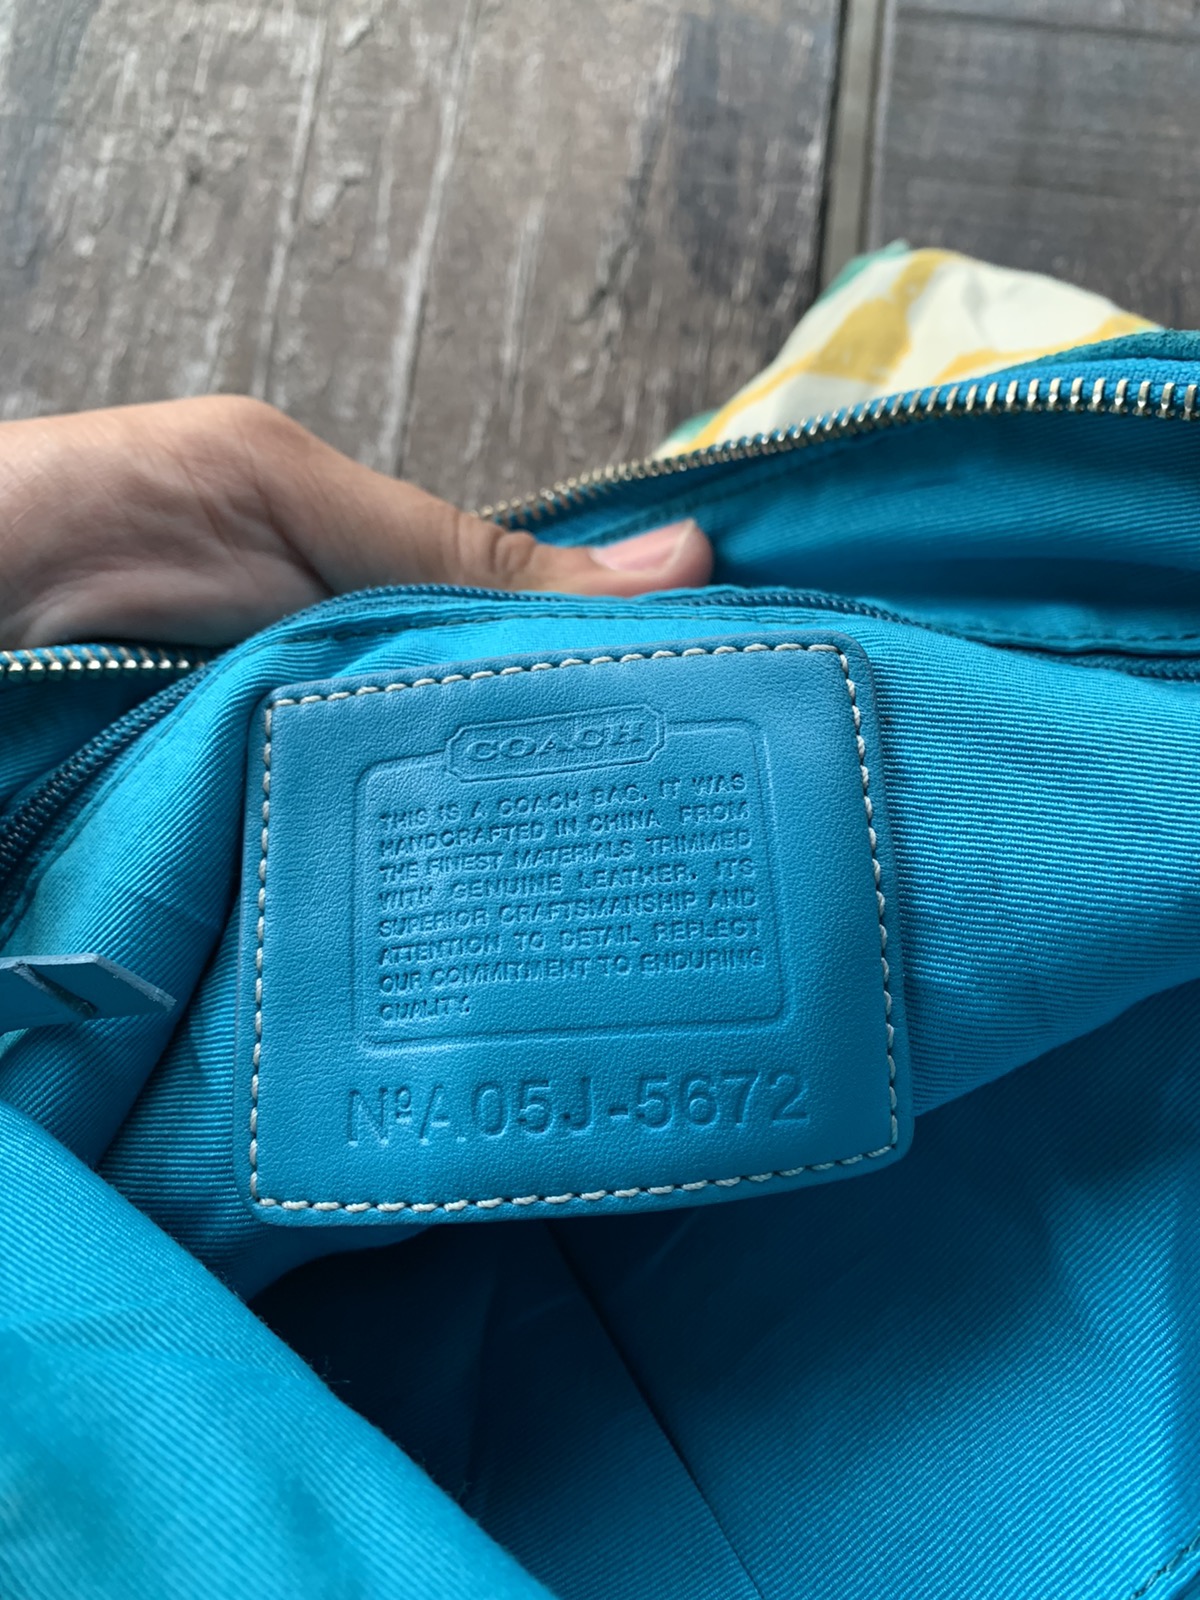 Coach - Coach sling bag nice design - 14